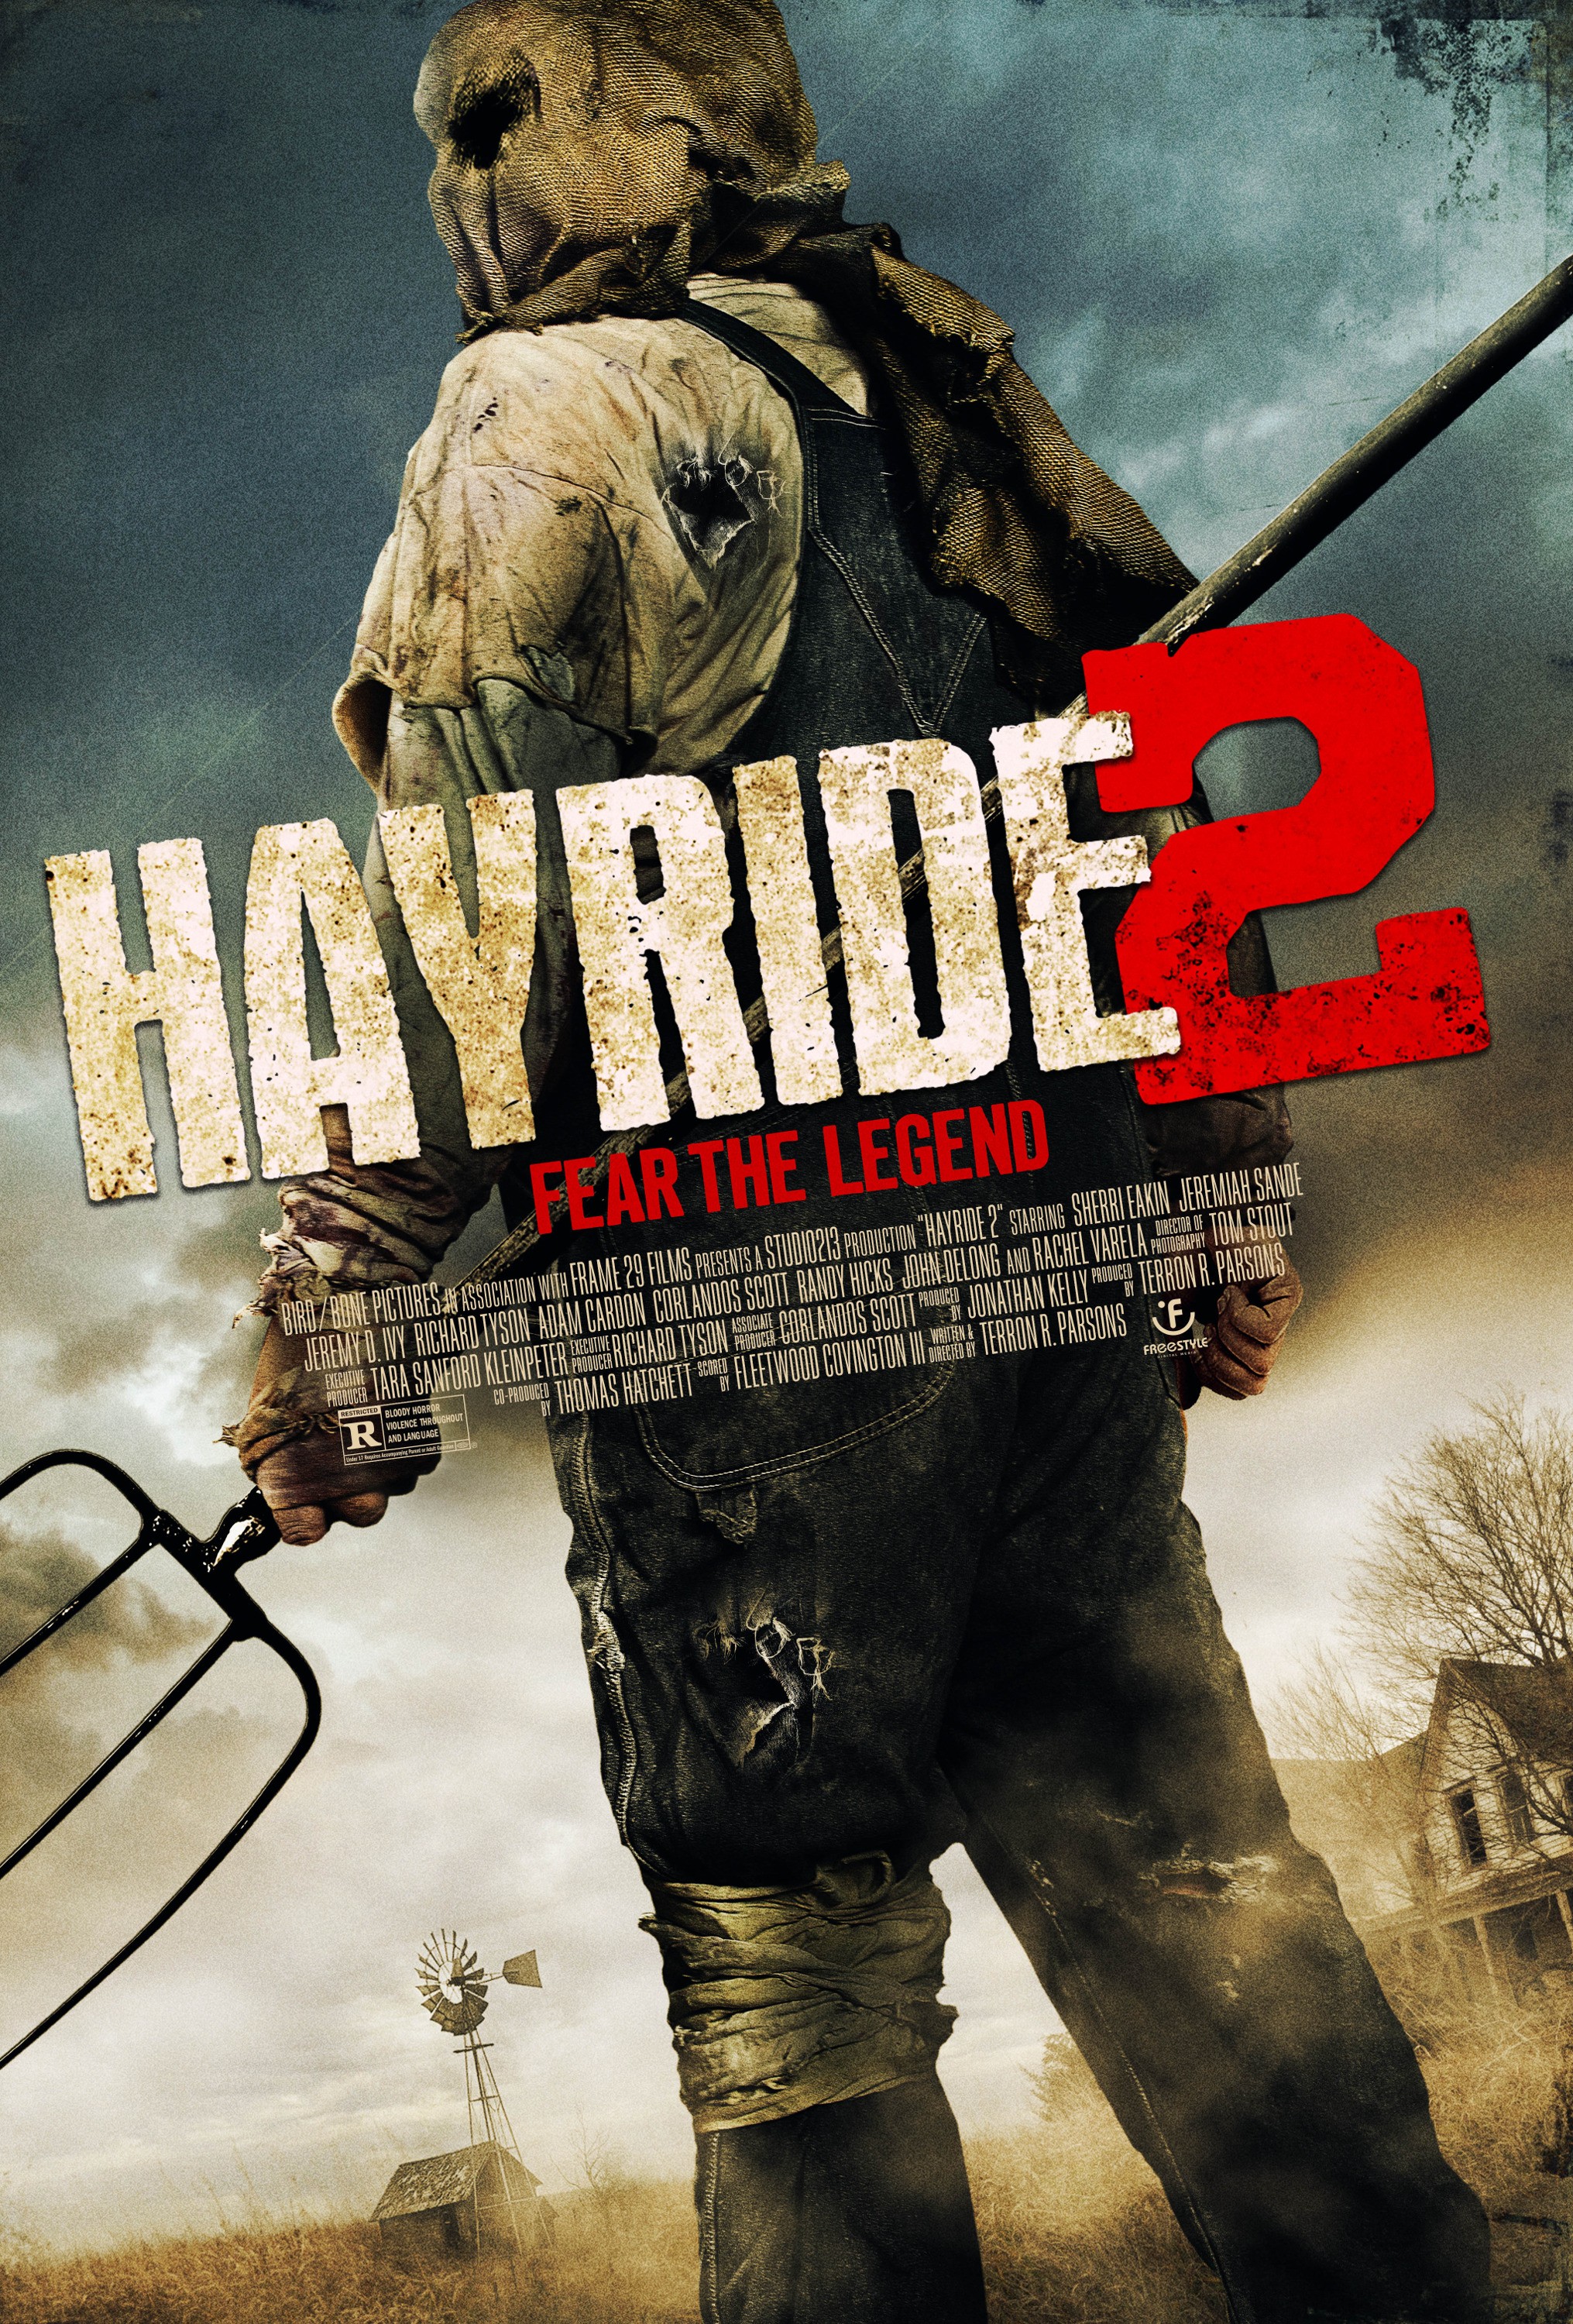 Mega Sized Movie Poster Image for Hayride 2 